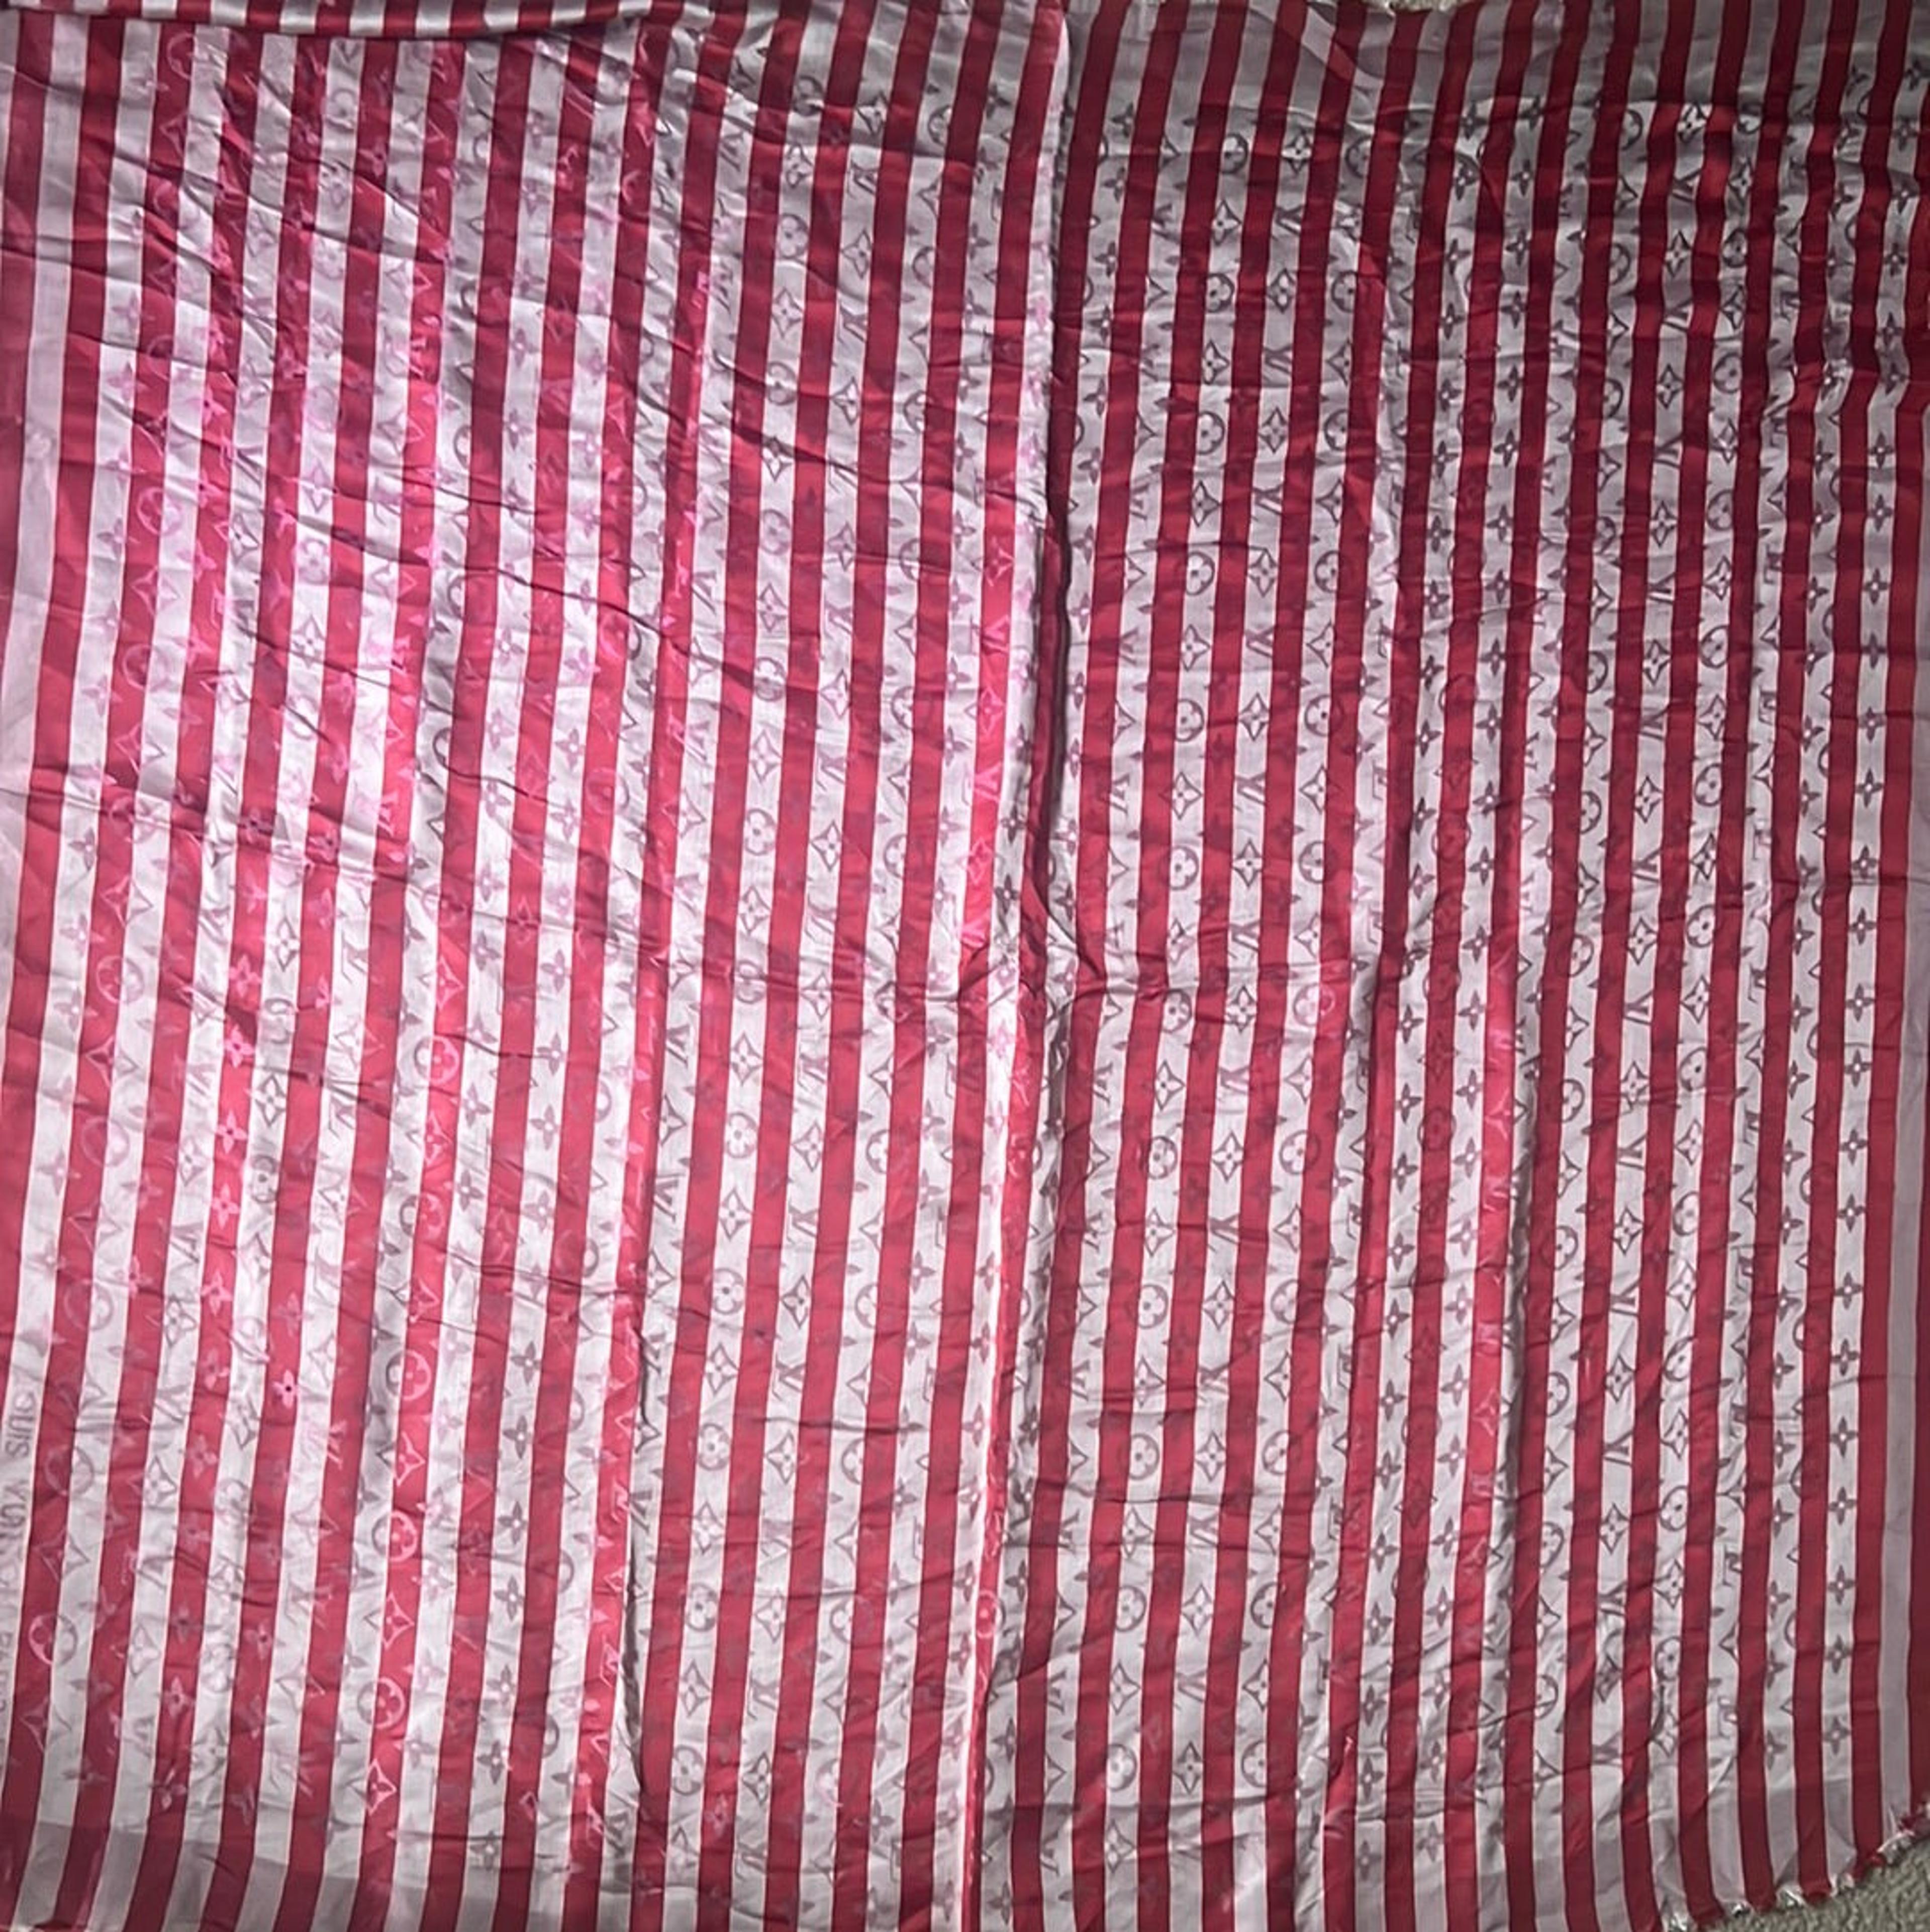 Alternate View 10 of Louis Vuitton Red White Stripe Silk Blend Scarf